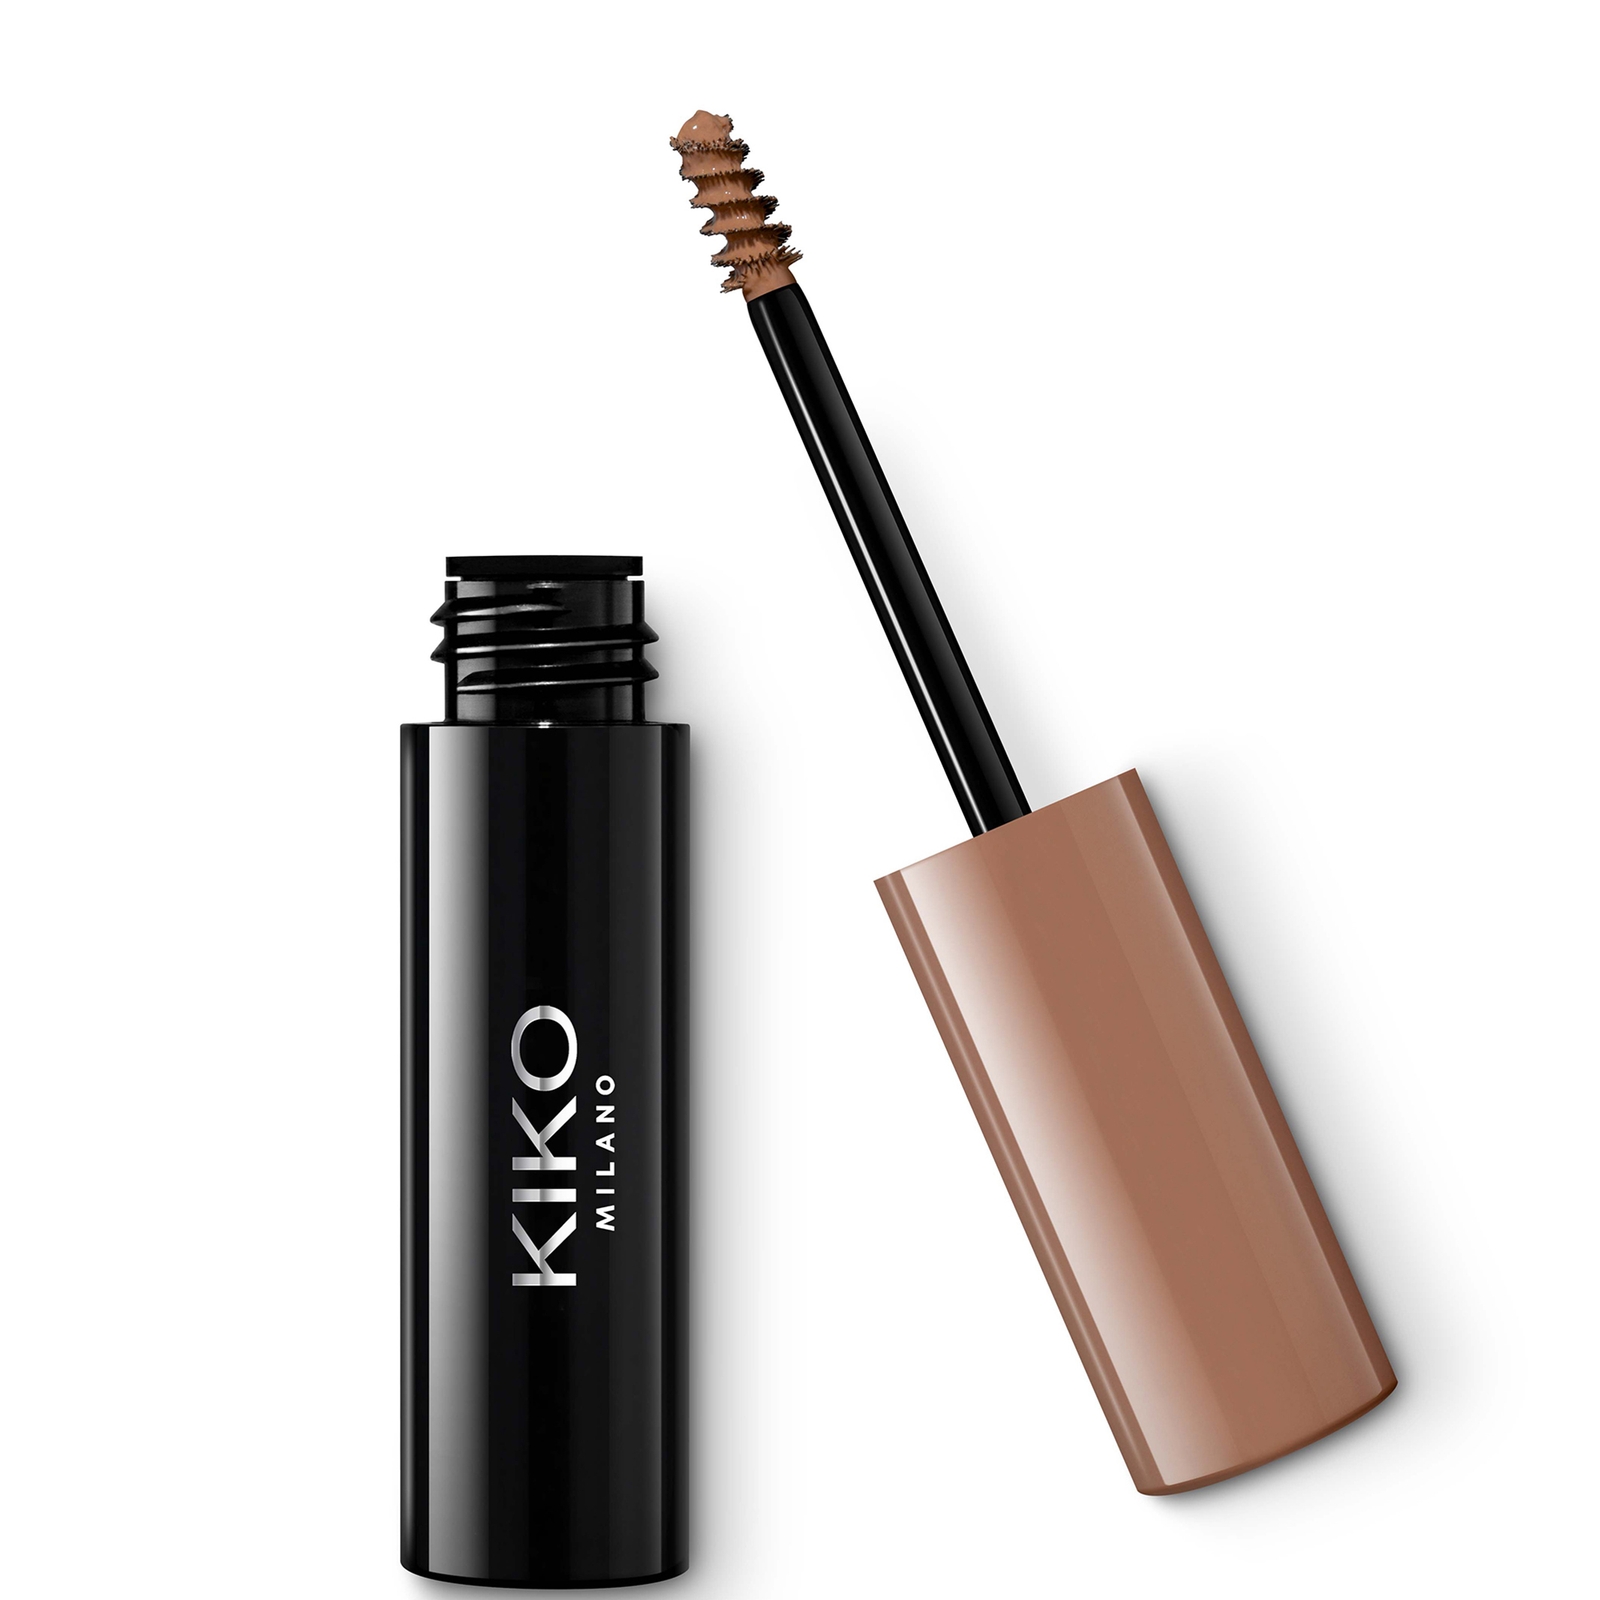 Image of KIKO Milano Eyebrow Fibers Coloured Mascara 4.2ml (Various Shades) - 04 Auburn